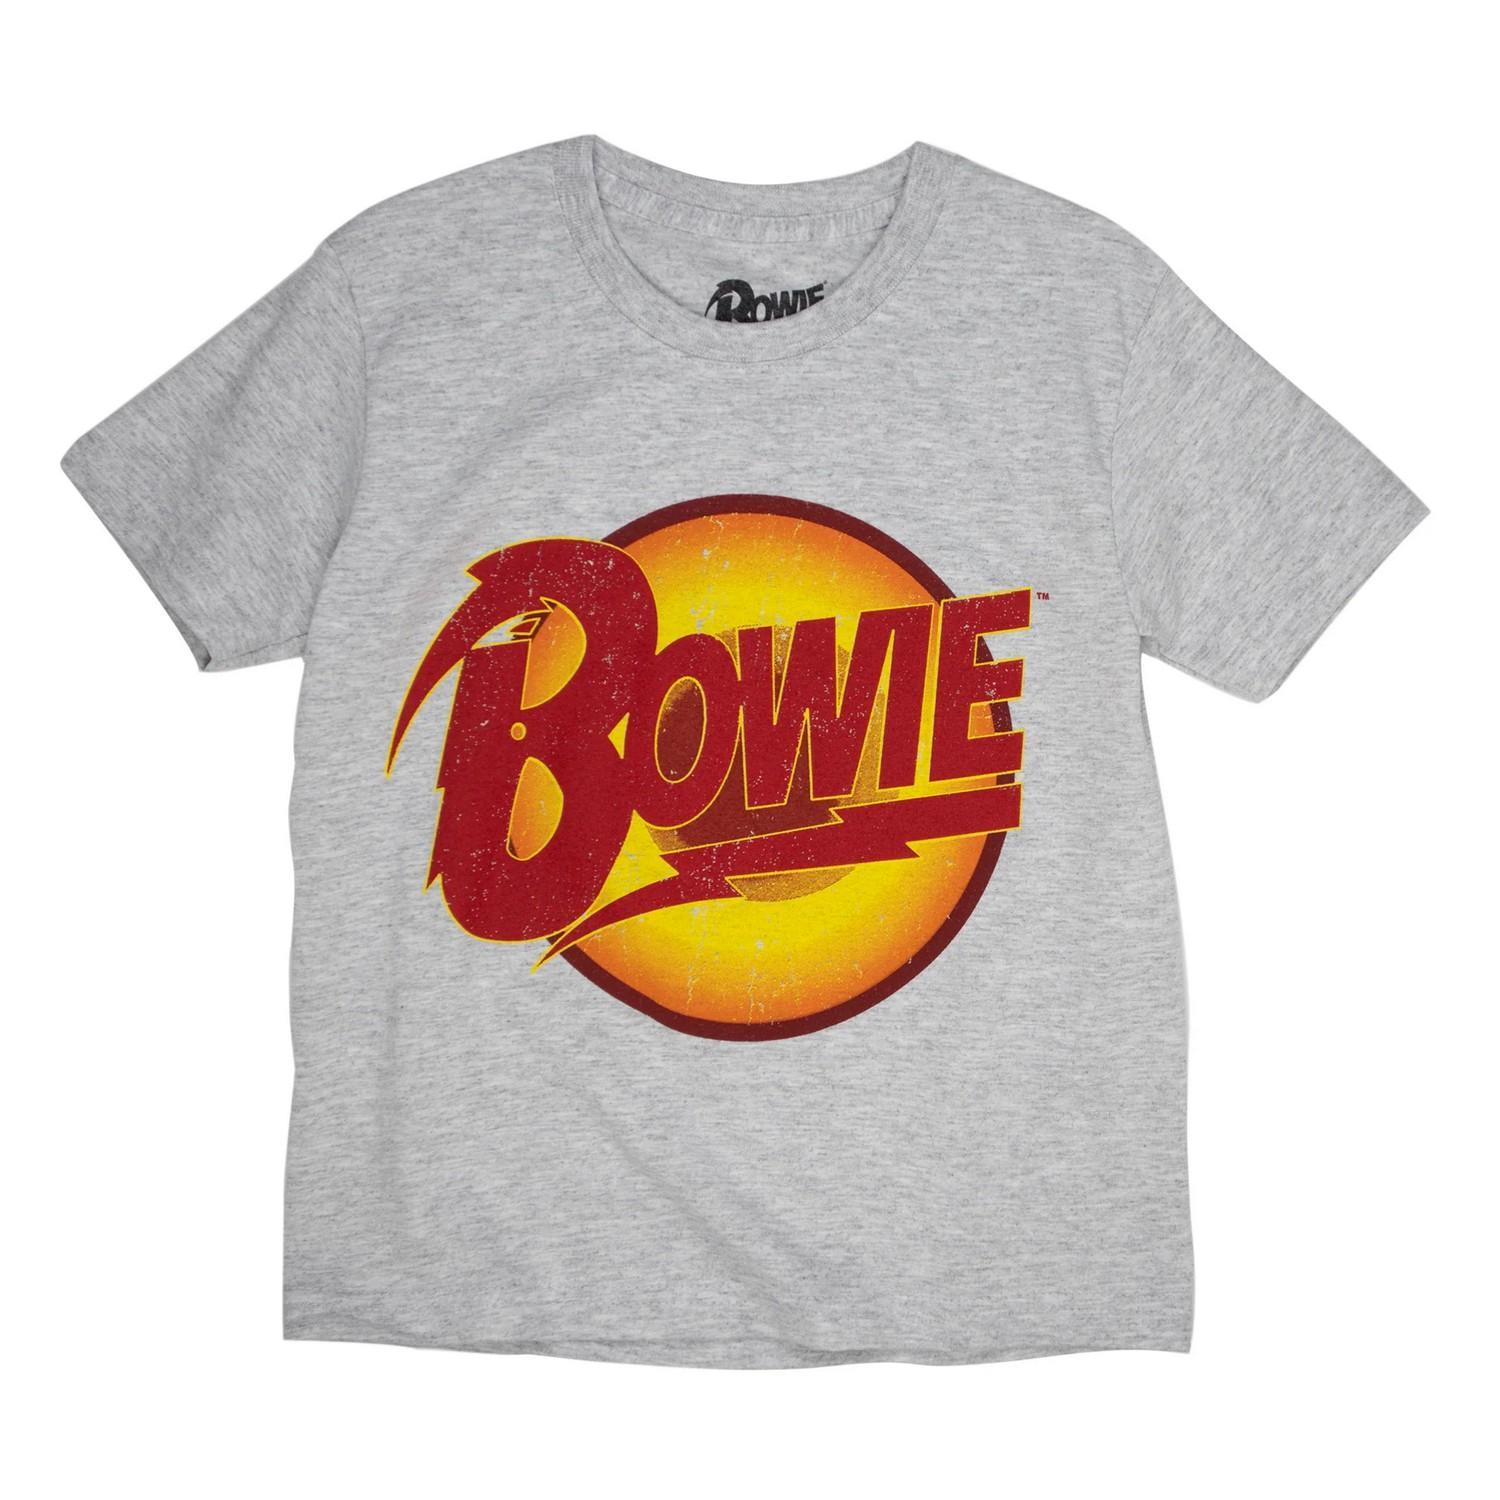 David Bowie Childrens/Kids Diamond Dogs Vintage Logo T-Shirt (Heather Grey) (9-10 Years)